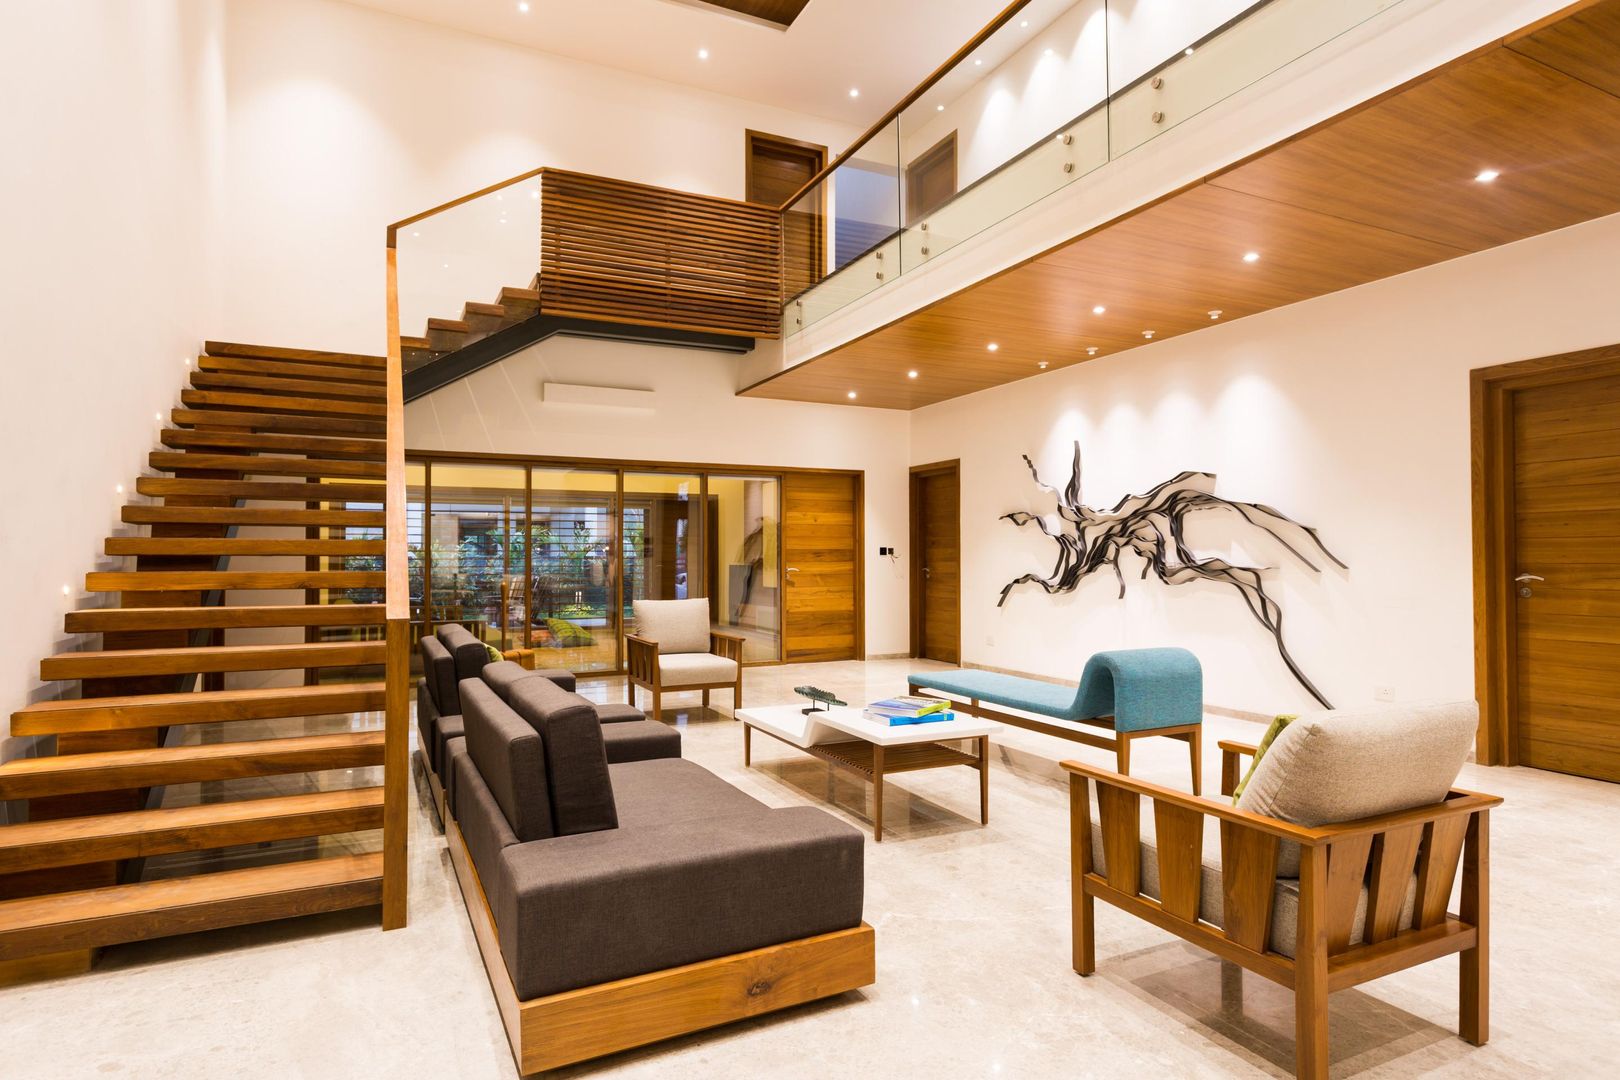 Jayesh bhai interiors, Vipul Patel Architects Vipul Patel Architects Modern living room